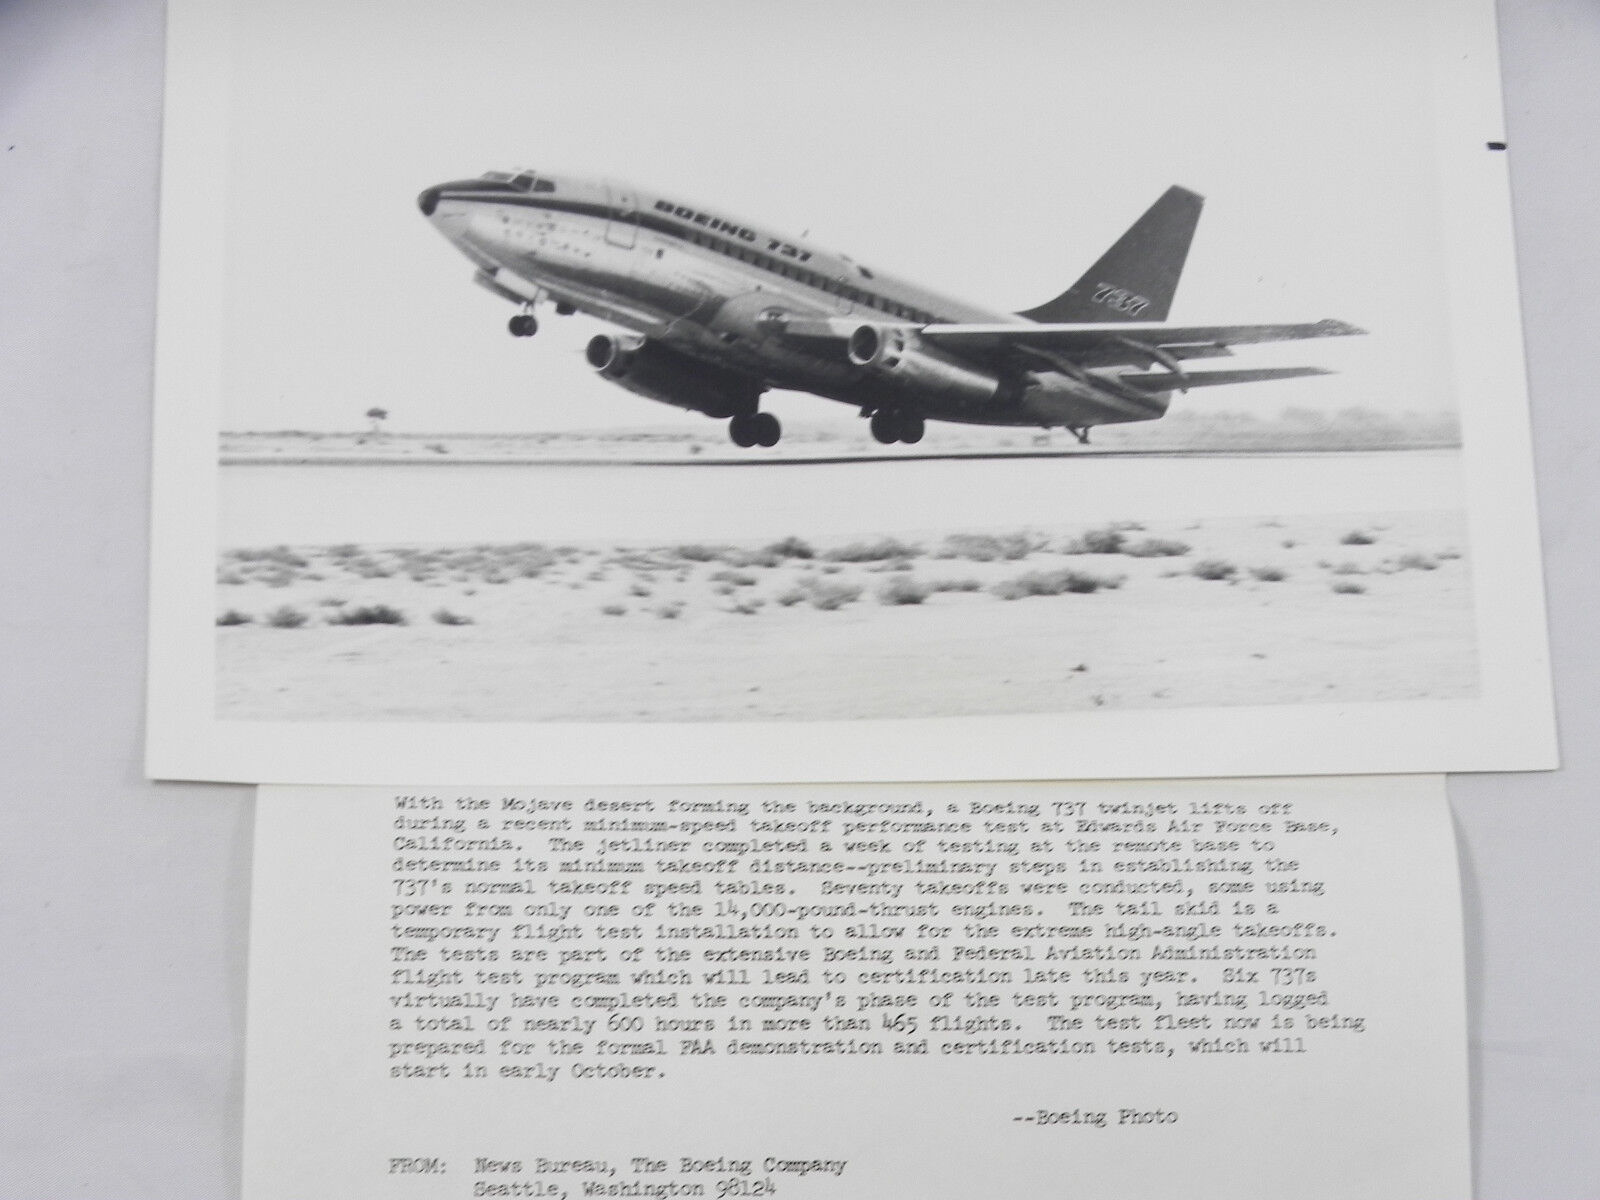 8x10 B&W Print BOEING 737 PHOTO, Test Flight, at Takeoff, Edwards AFB w/ Text